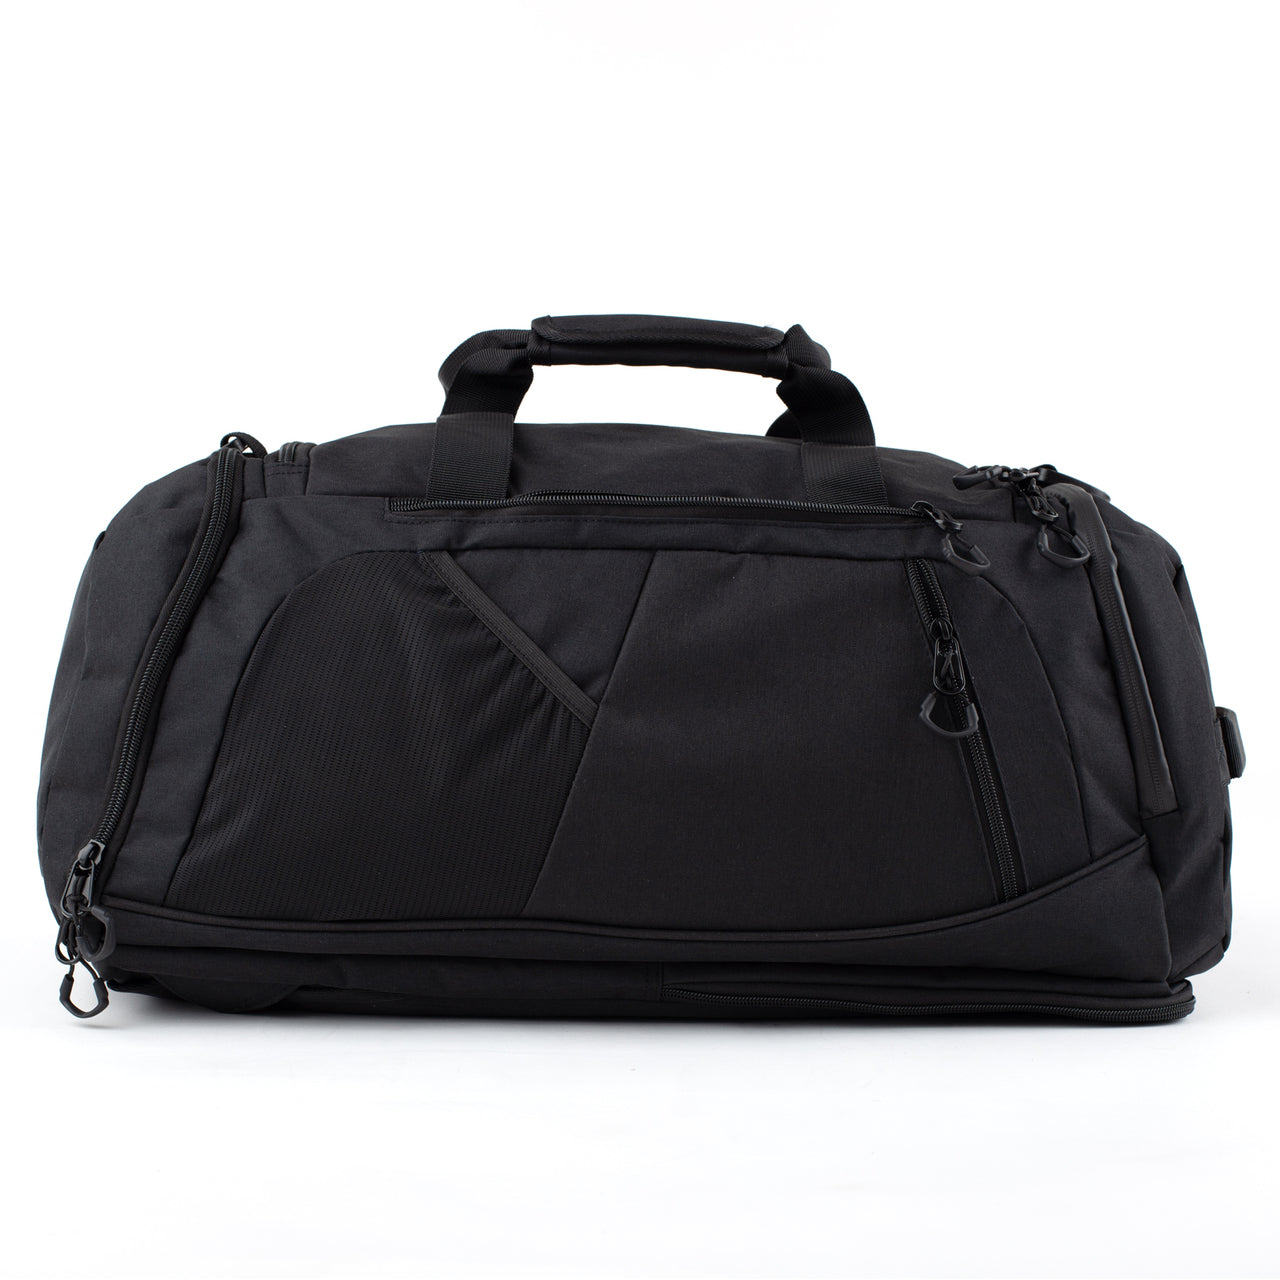 93brand "Construct" Convertible Gear Bag (Duffel/Backpack Hybrid) - Black